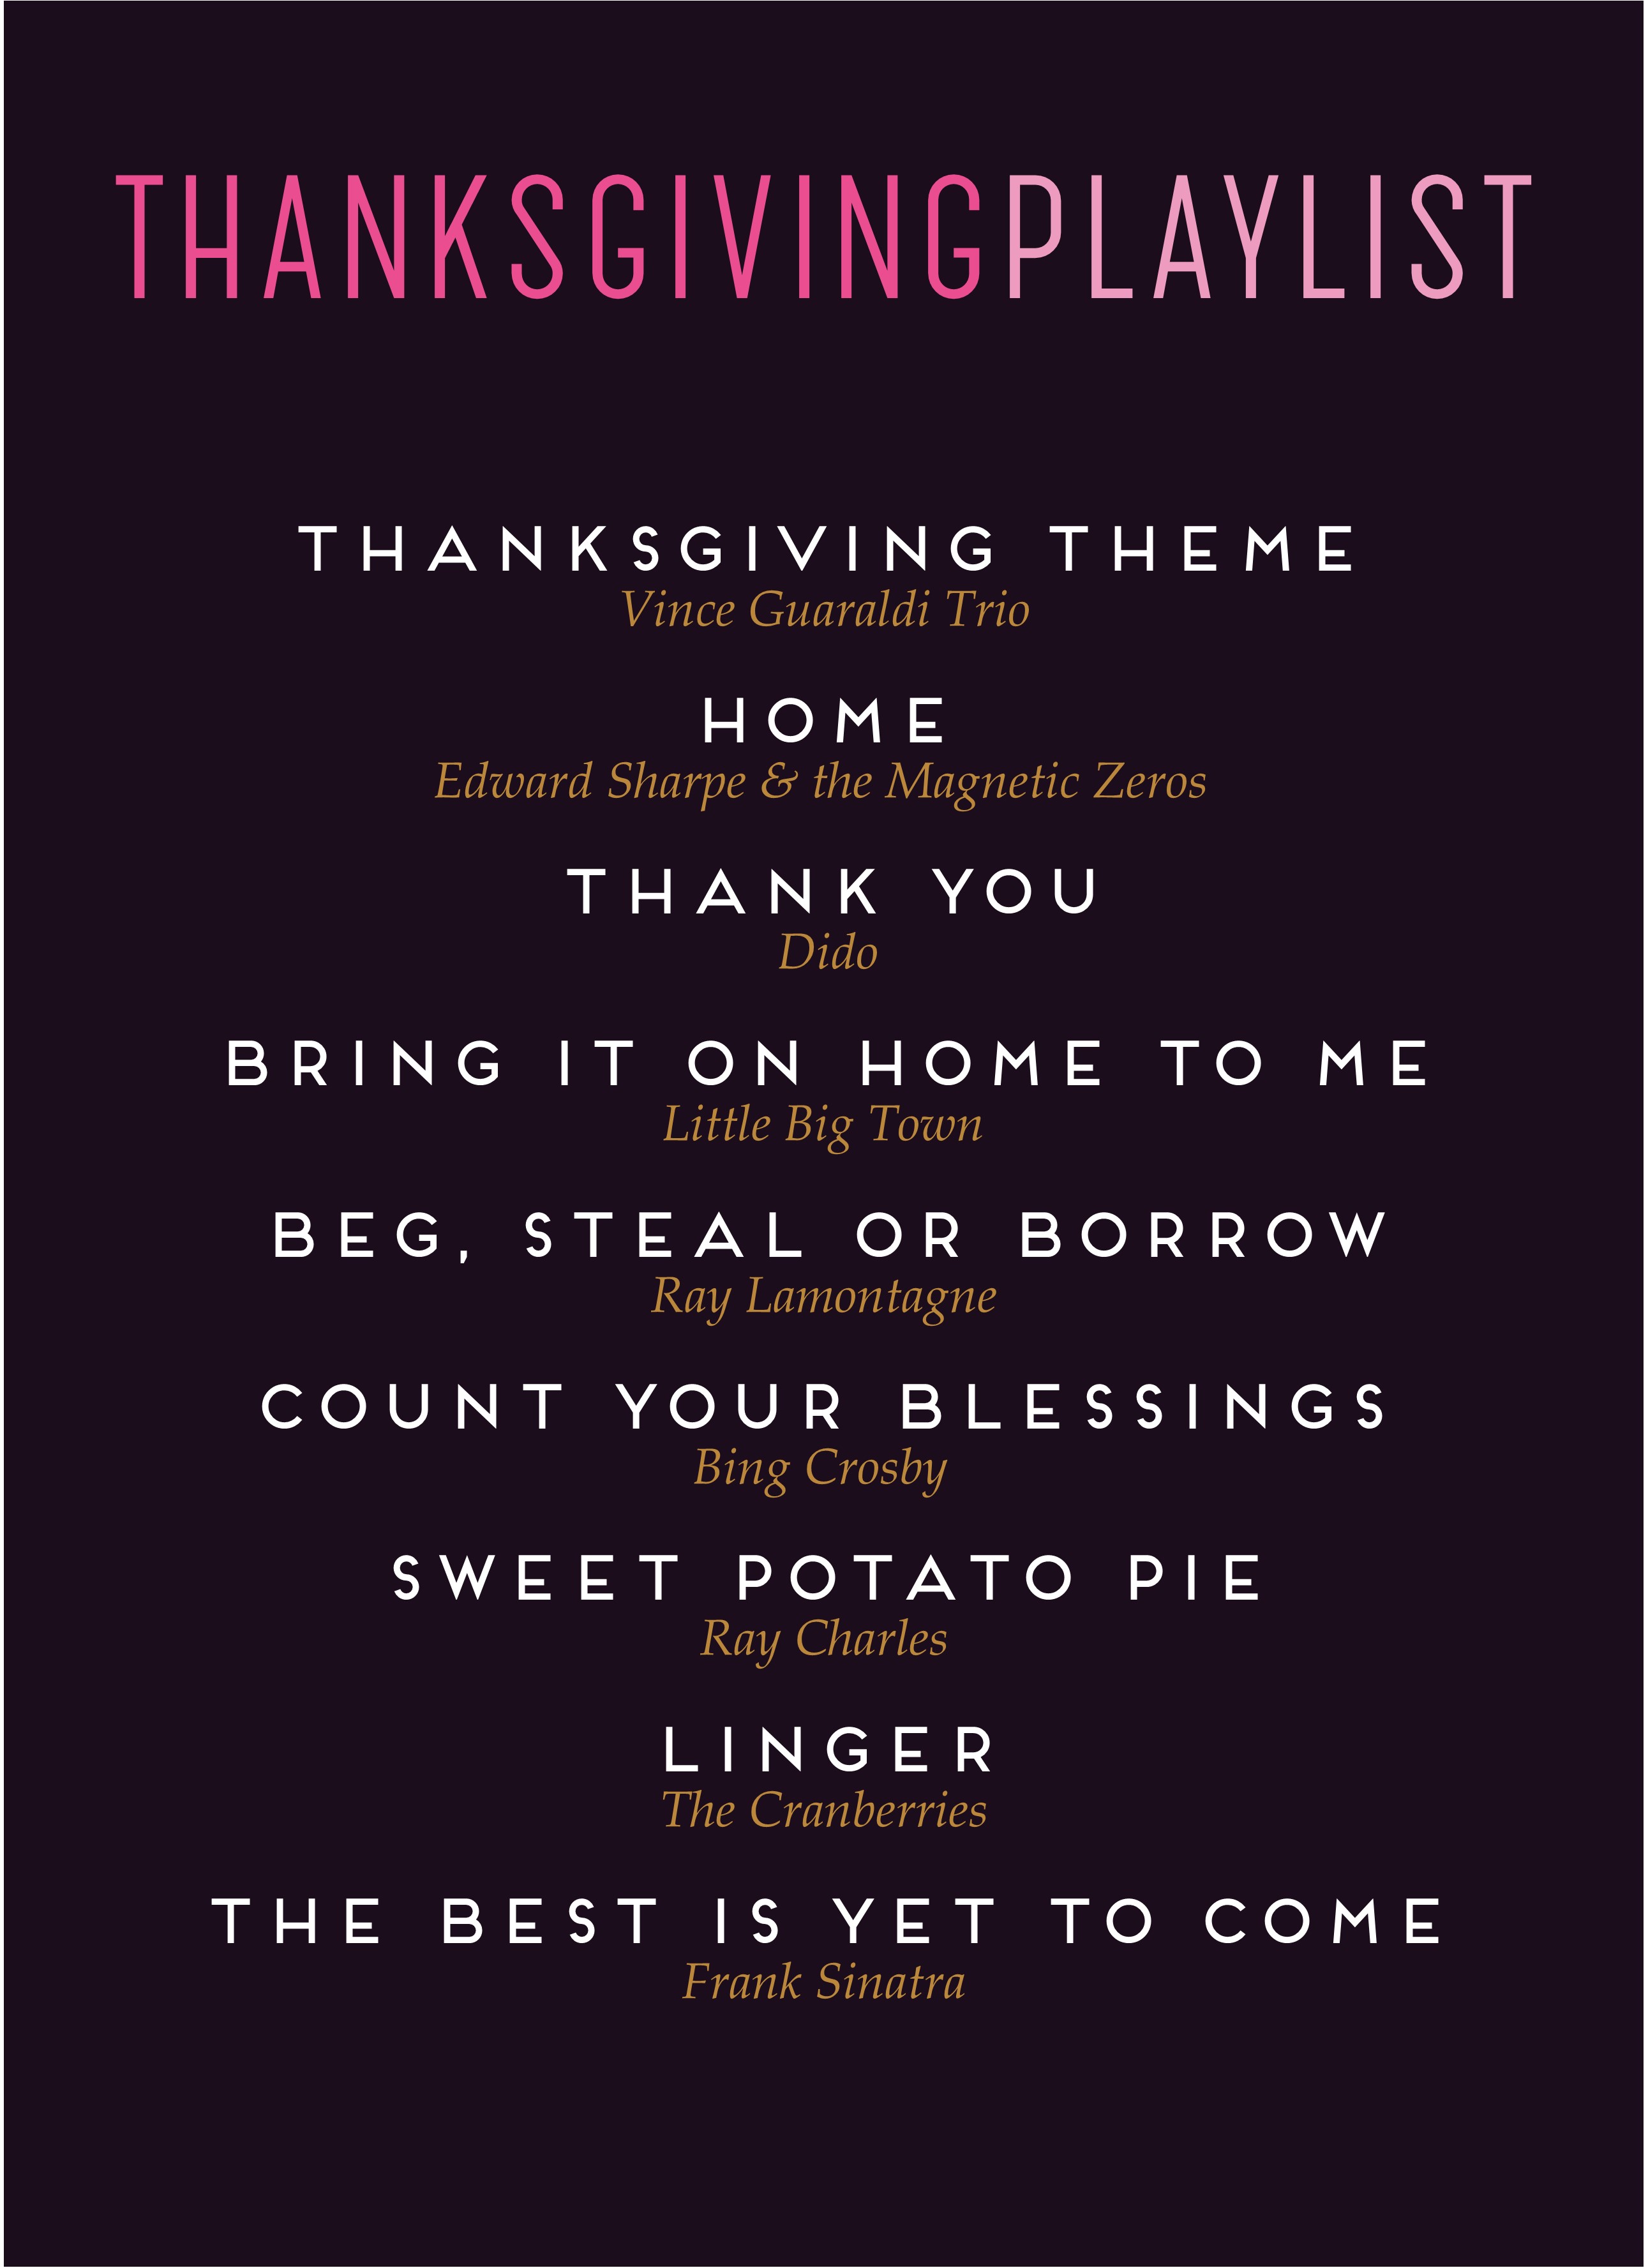 Thanksgiving Playlist